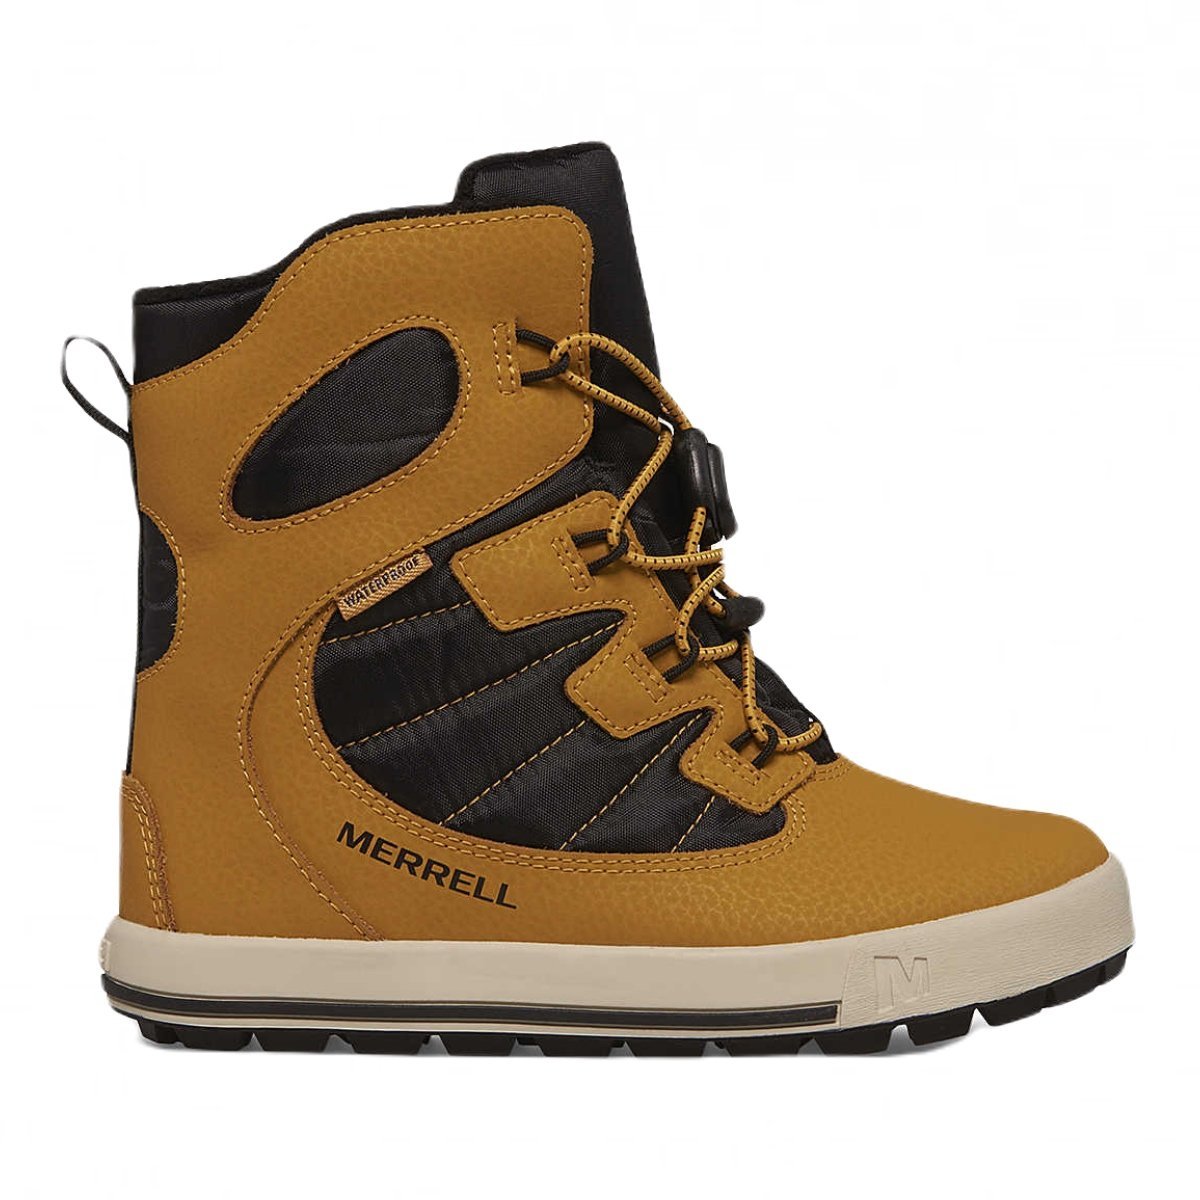 Взуття Merrell Snow Bank 4.0 WTPF J MK267146 - коричневе / чорне